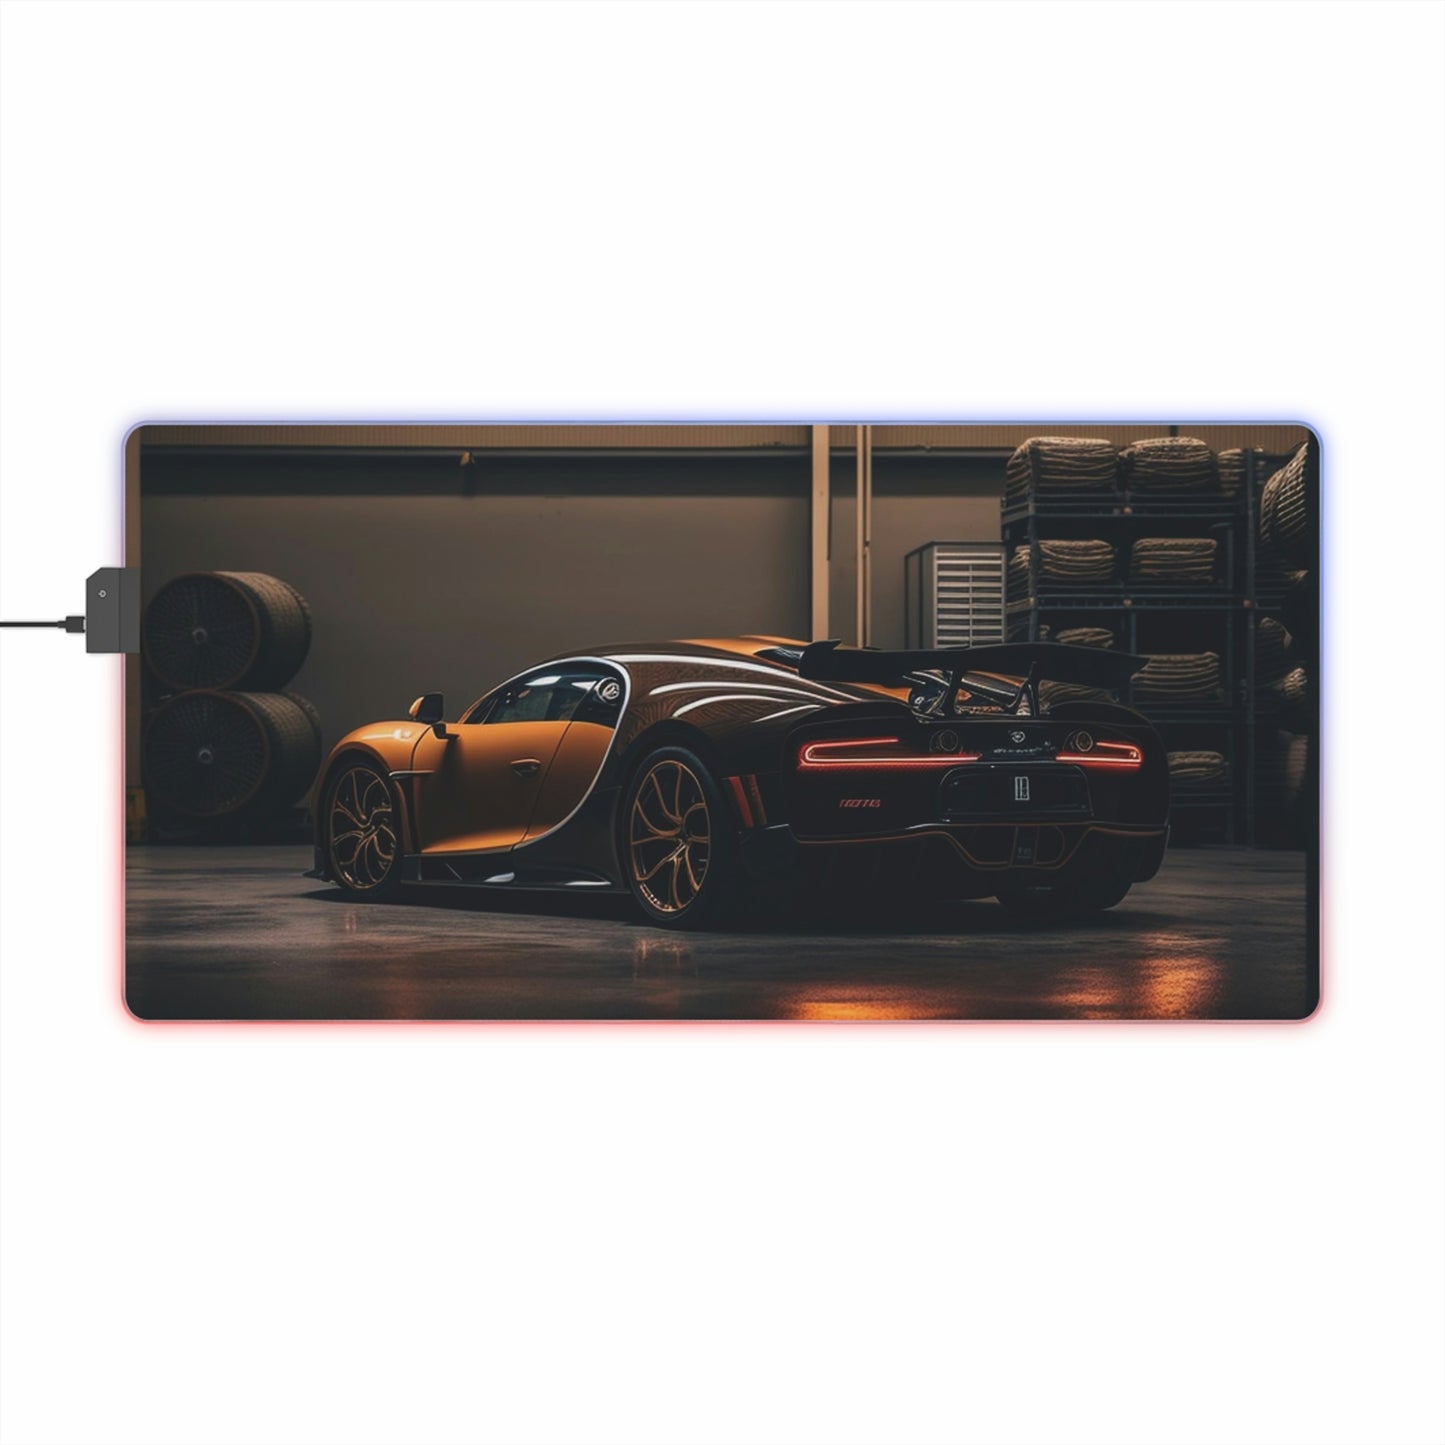 LED Gaming Mouse Pad Bugatti Orange 1